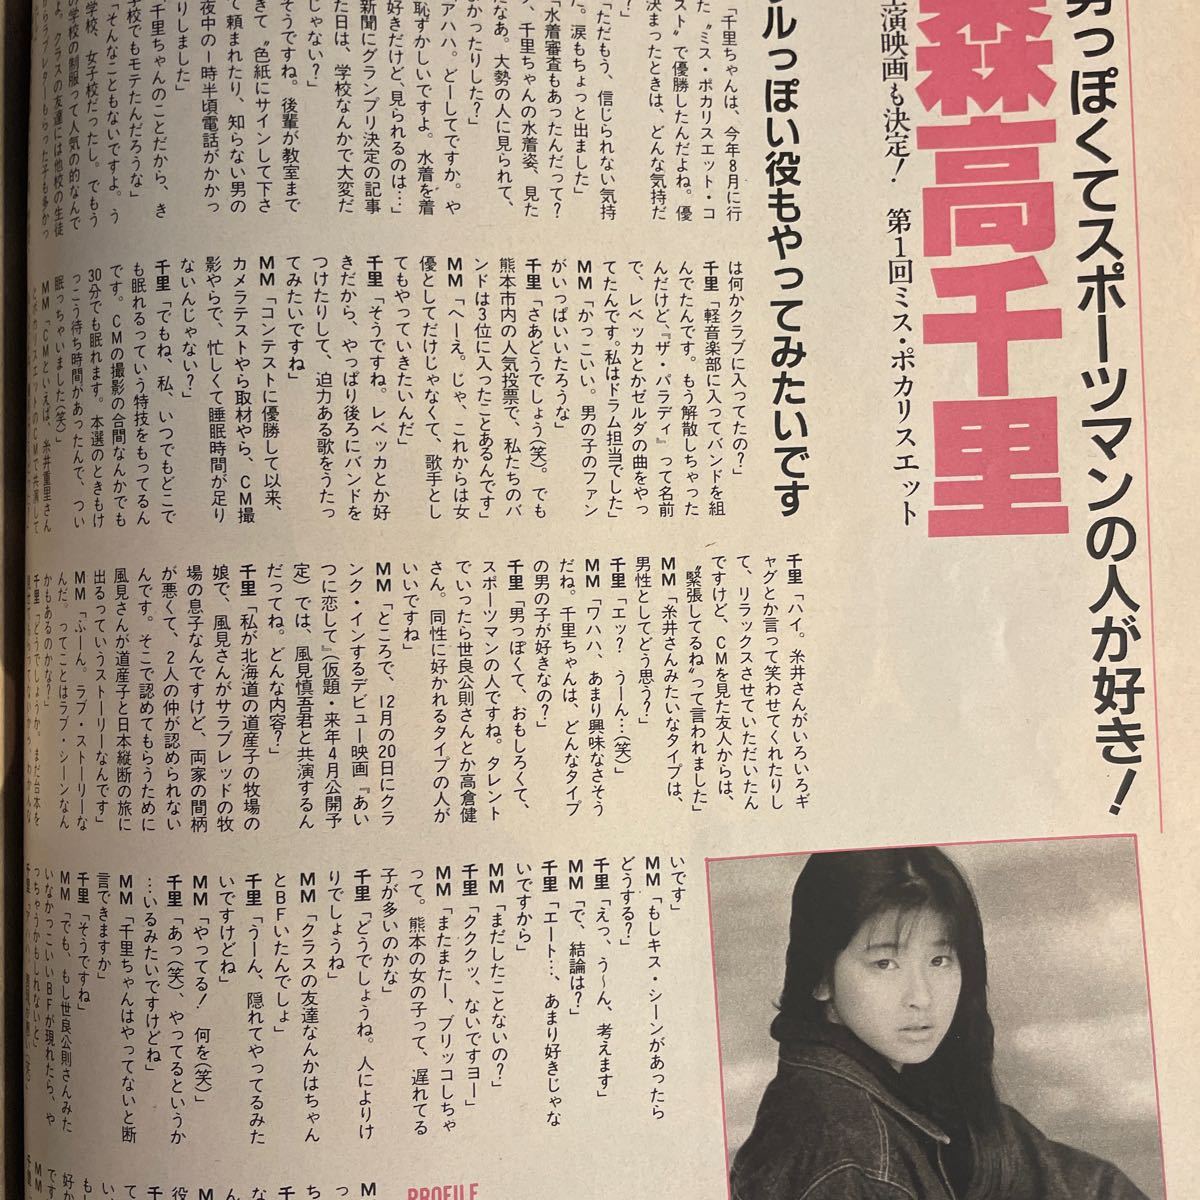  Momoko MOMOCO 1987.2. river .( swimsuit )3p heaven road ... Kikuchi Momoko Matsumoto .. Hatada Rie flower wheel .. Sugiura Miyuki Ikuina Akiko ( general person era )